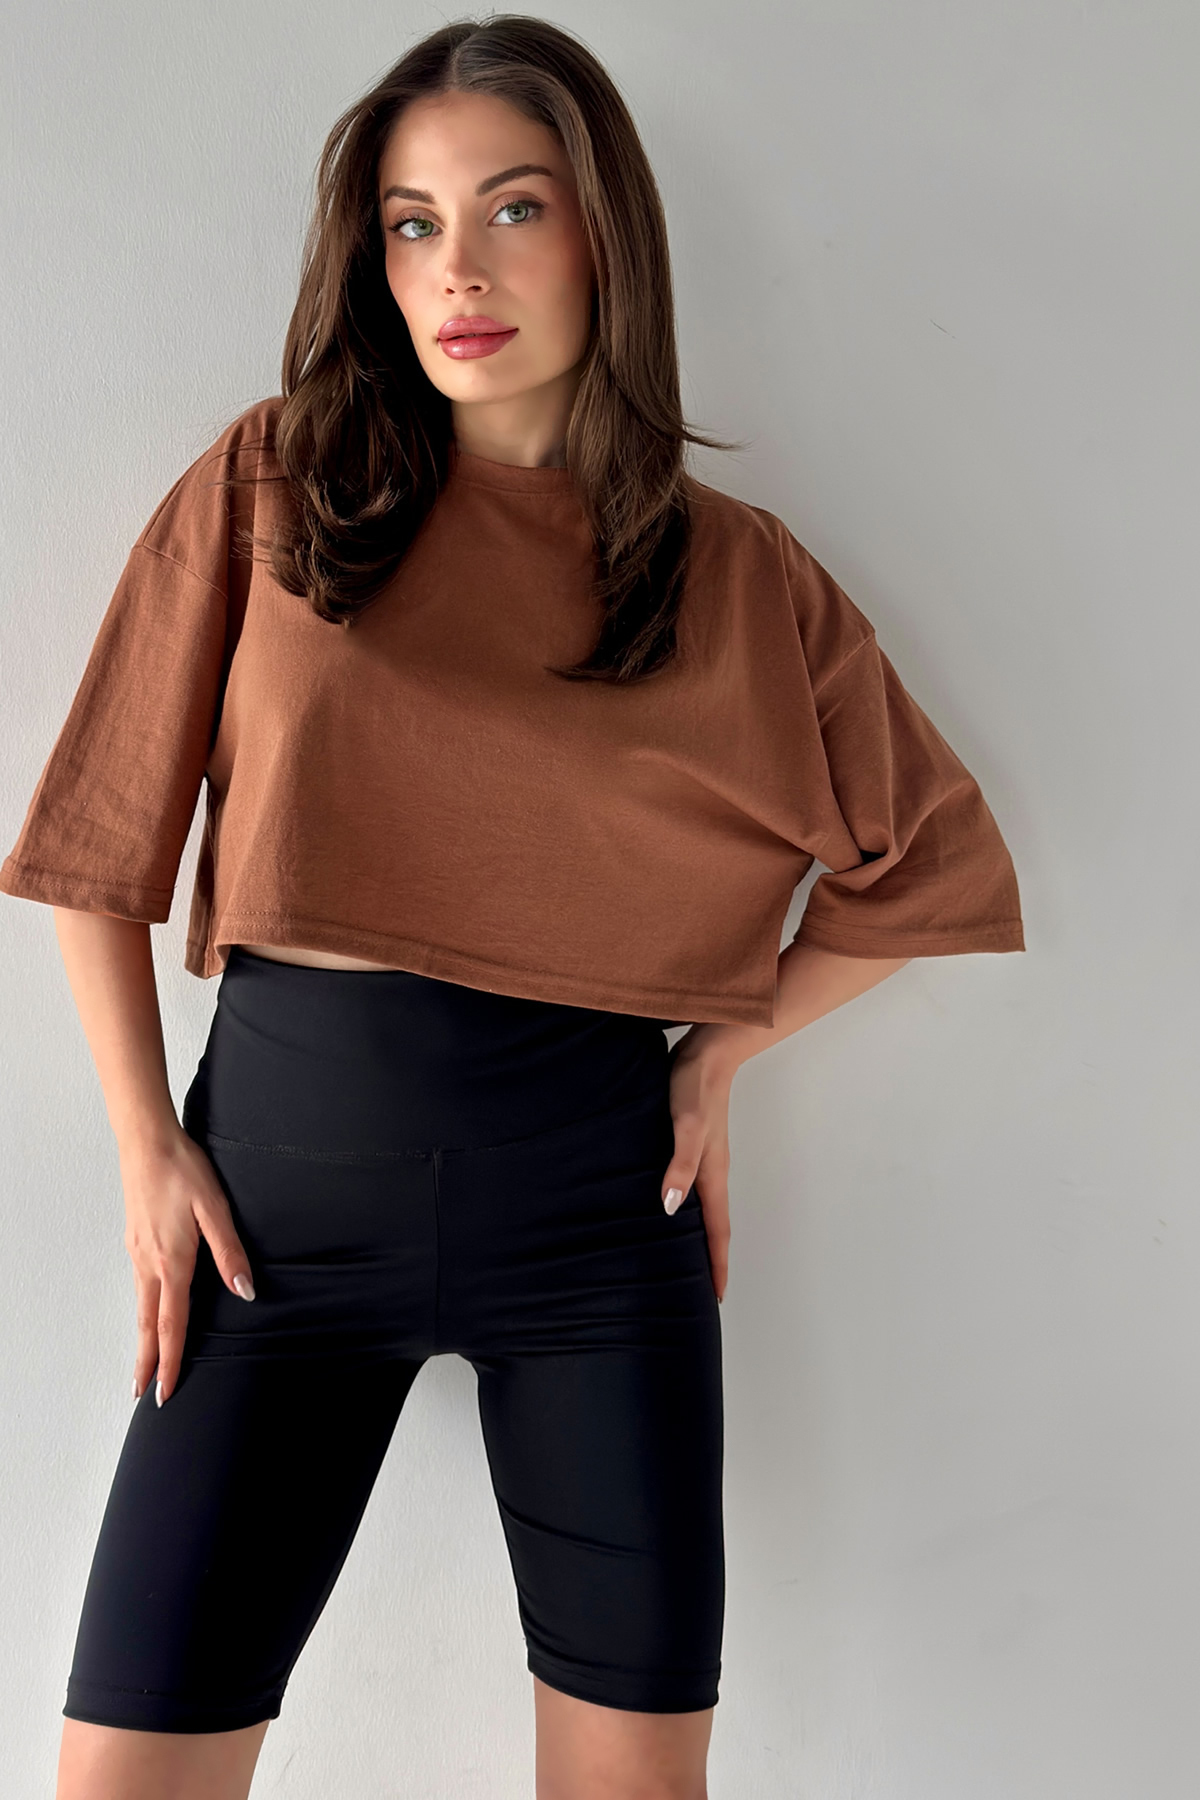 MODAGEN Women's Oversize Brown Crop Tshirt